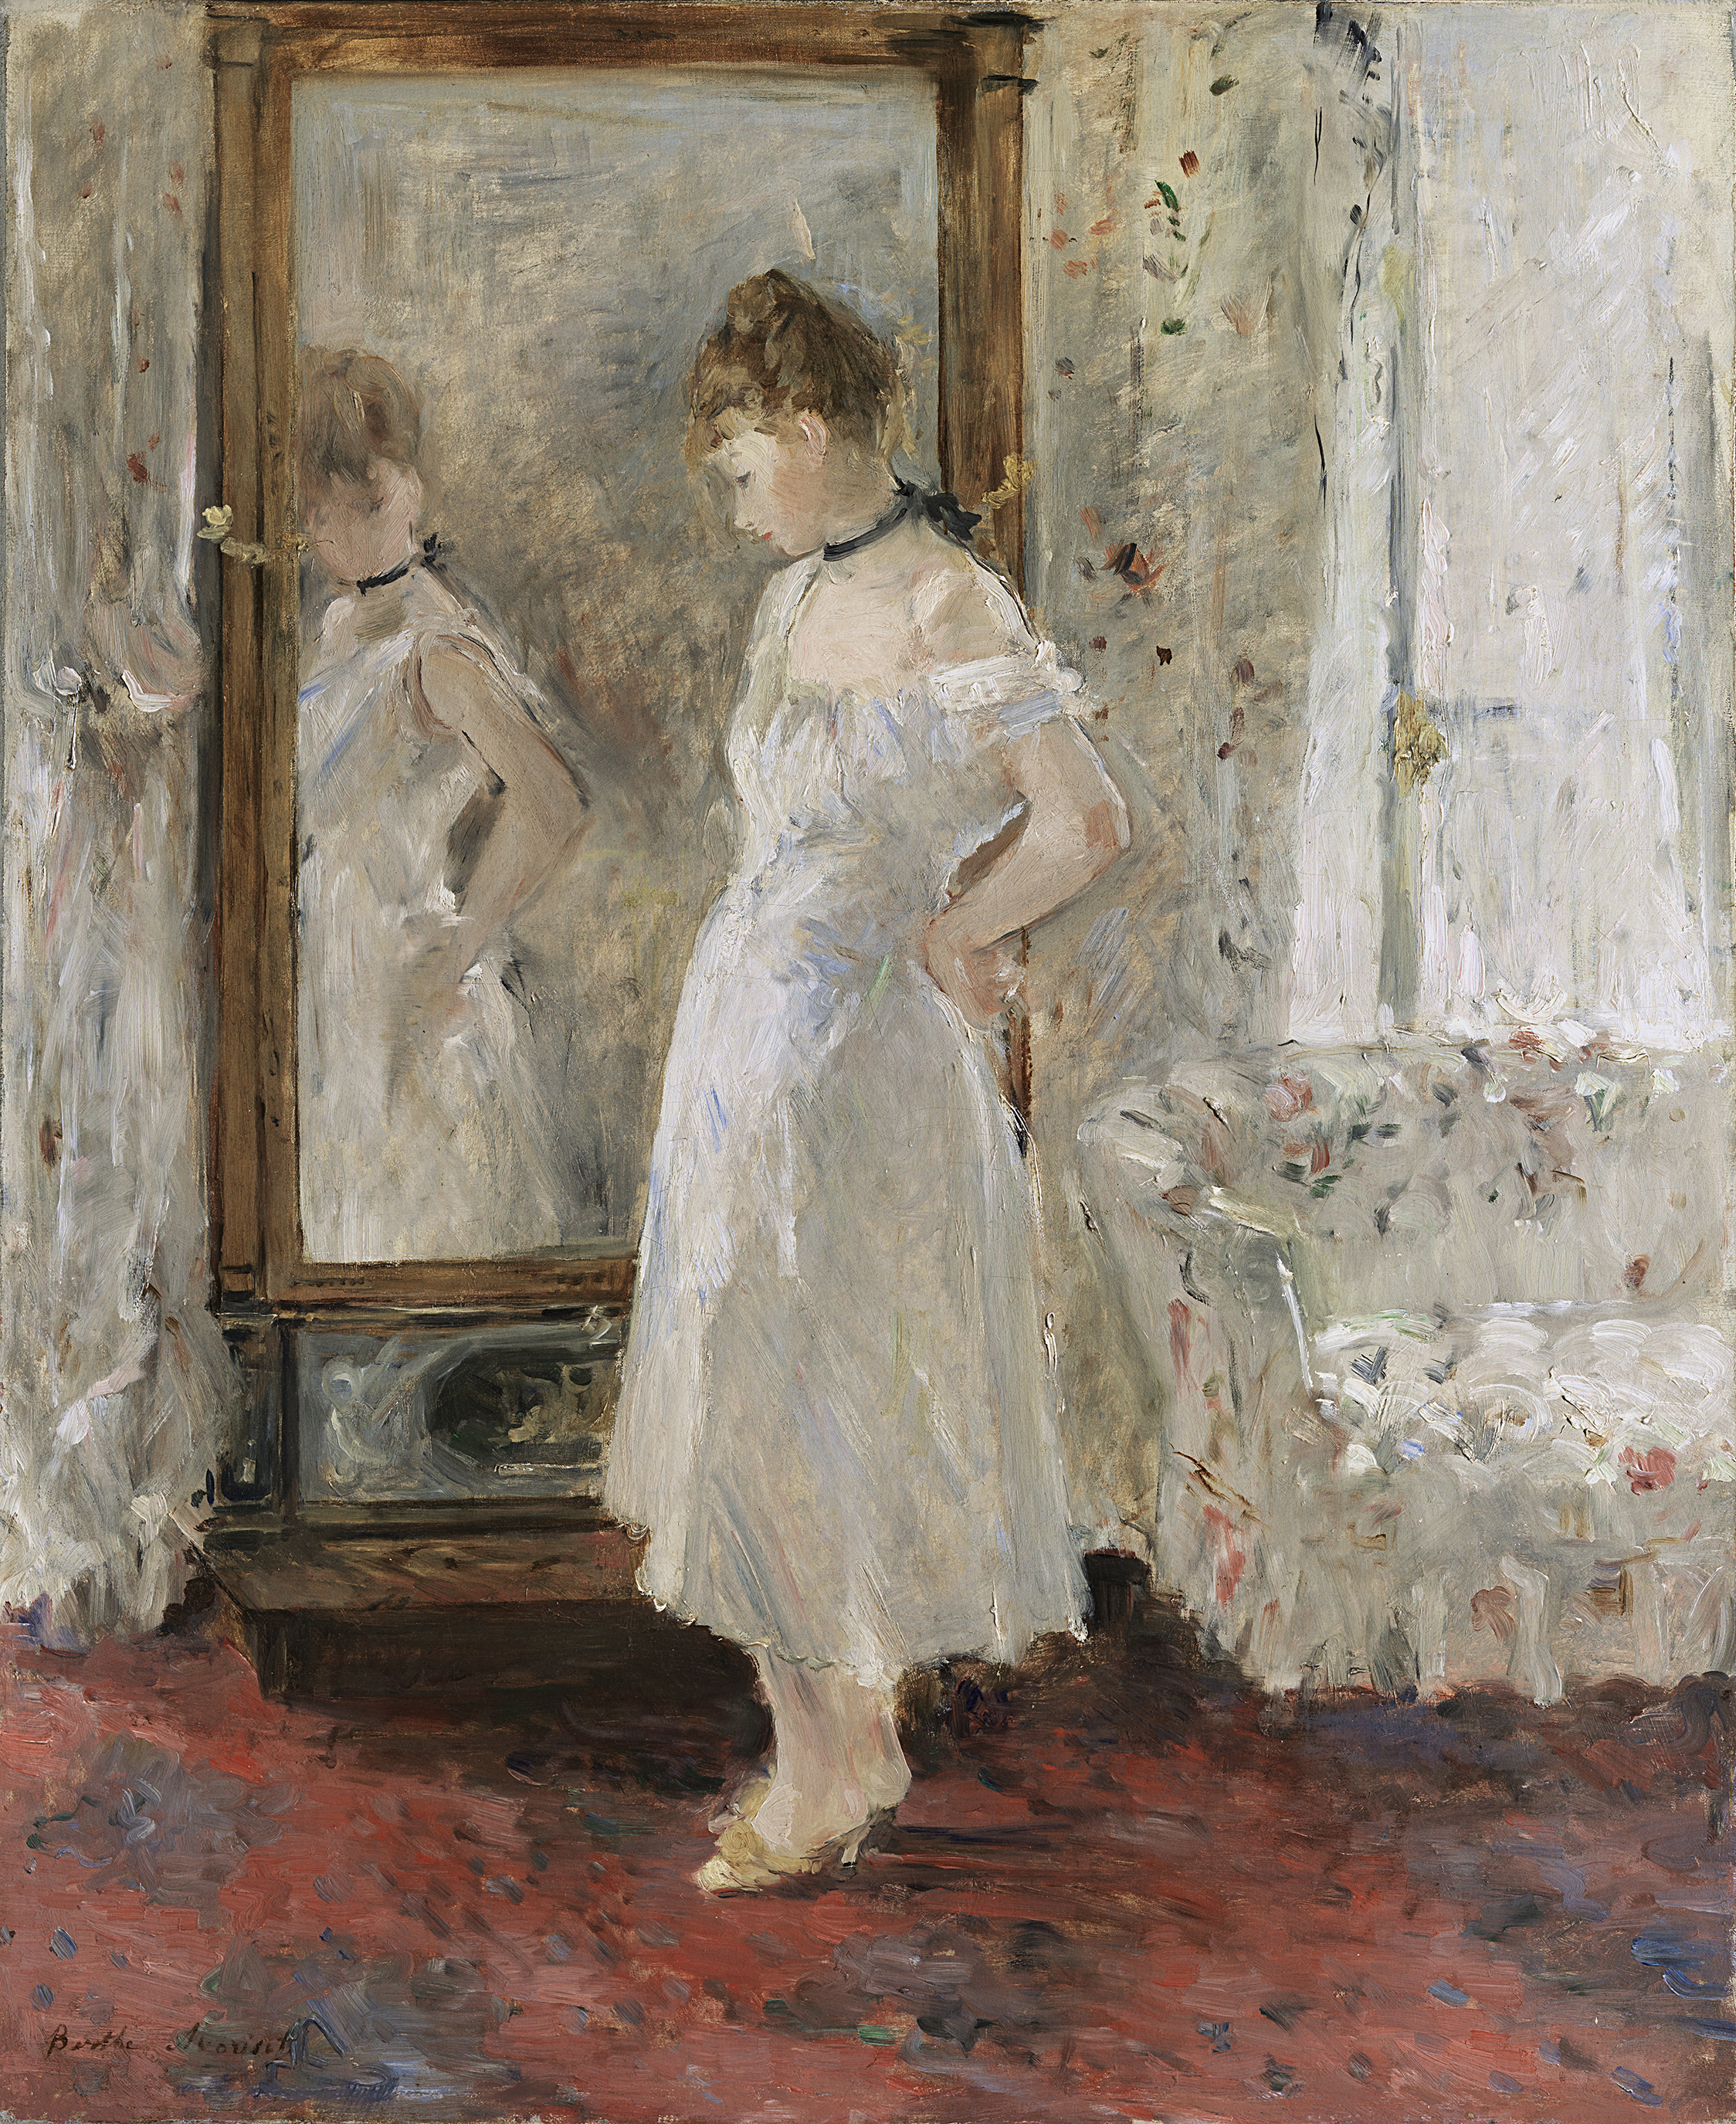 Психа огледало by Berthe Morisot - 1876. - 65 x 54 cm 